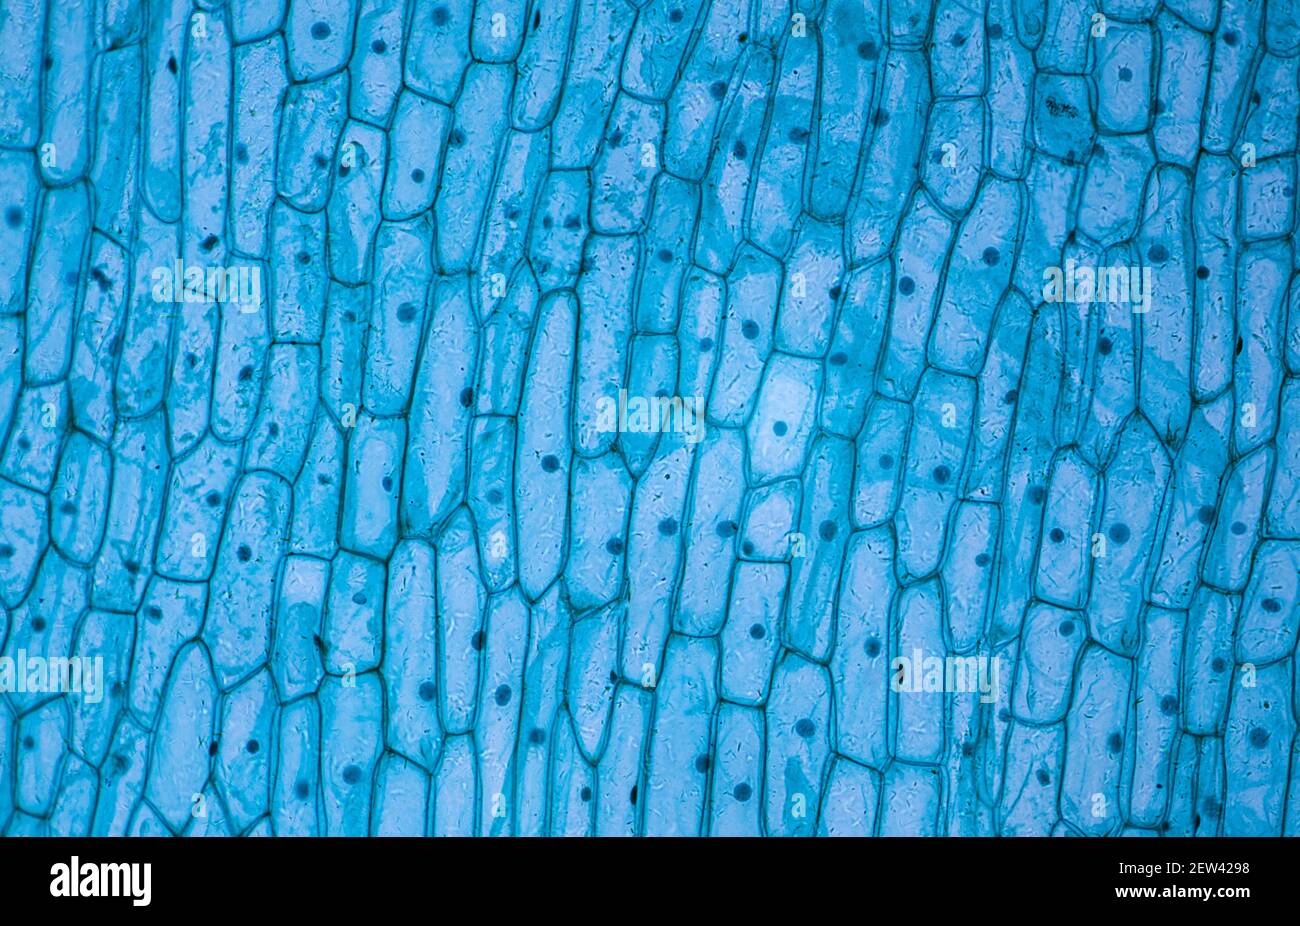 Celulas de cebolla fotografías e imágenes de alta resolución - Alamy